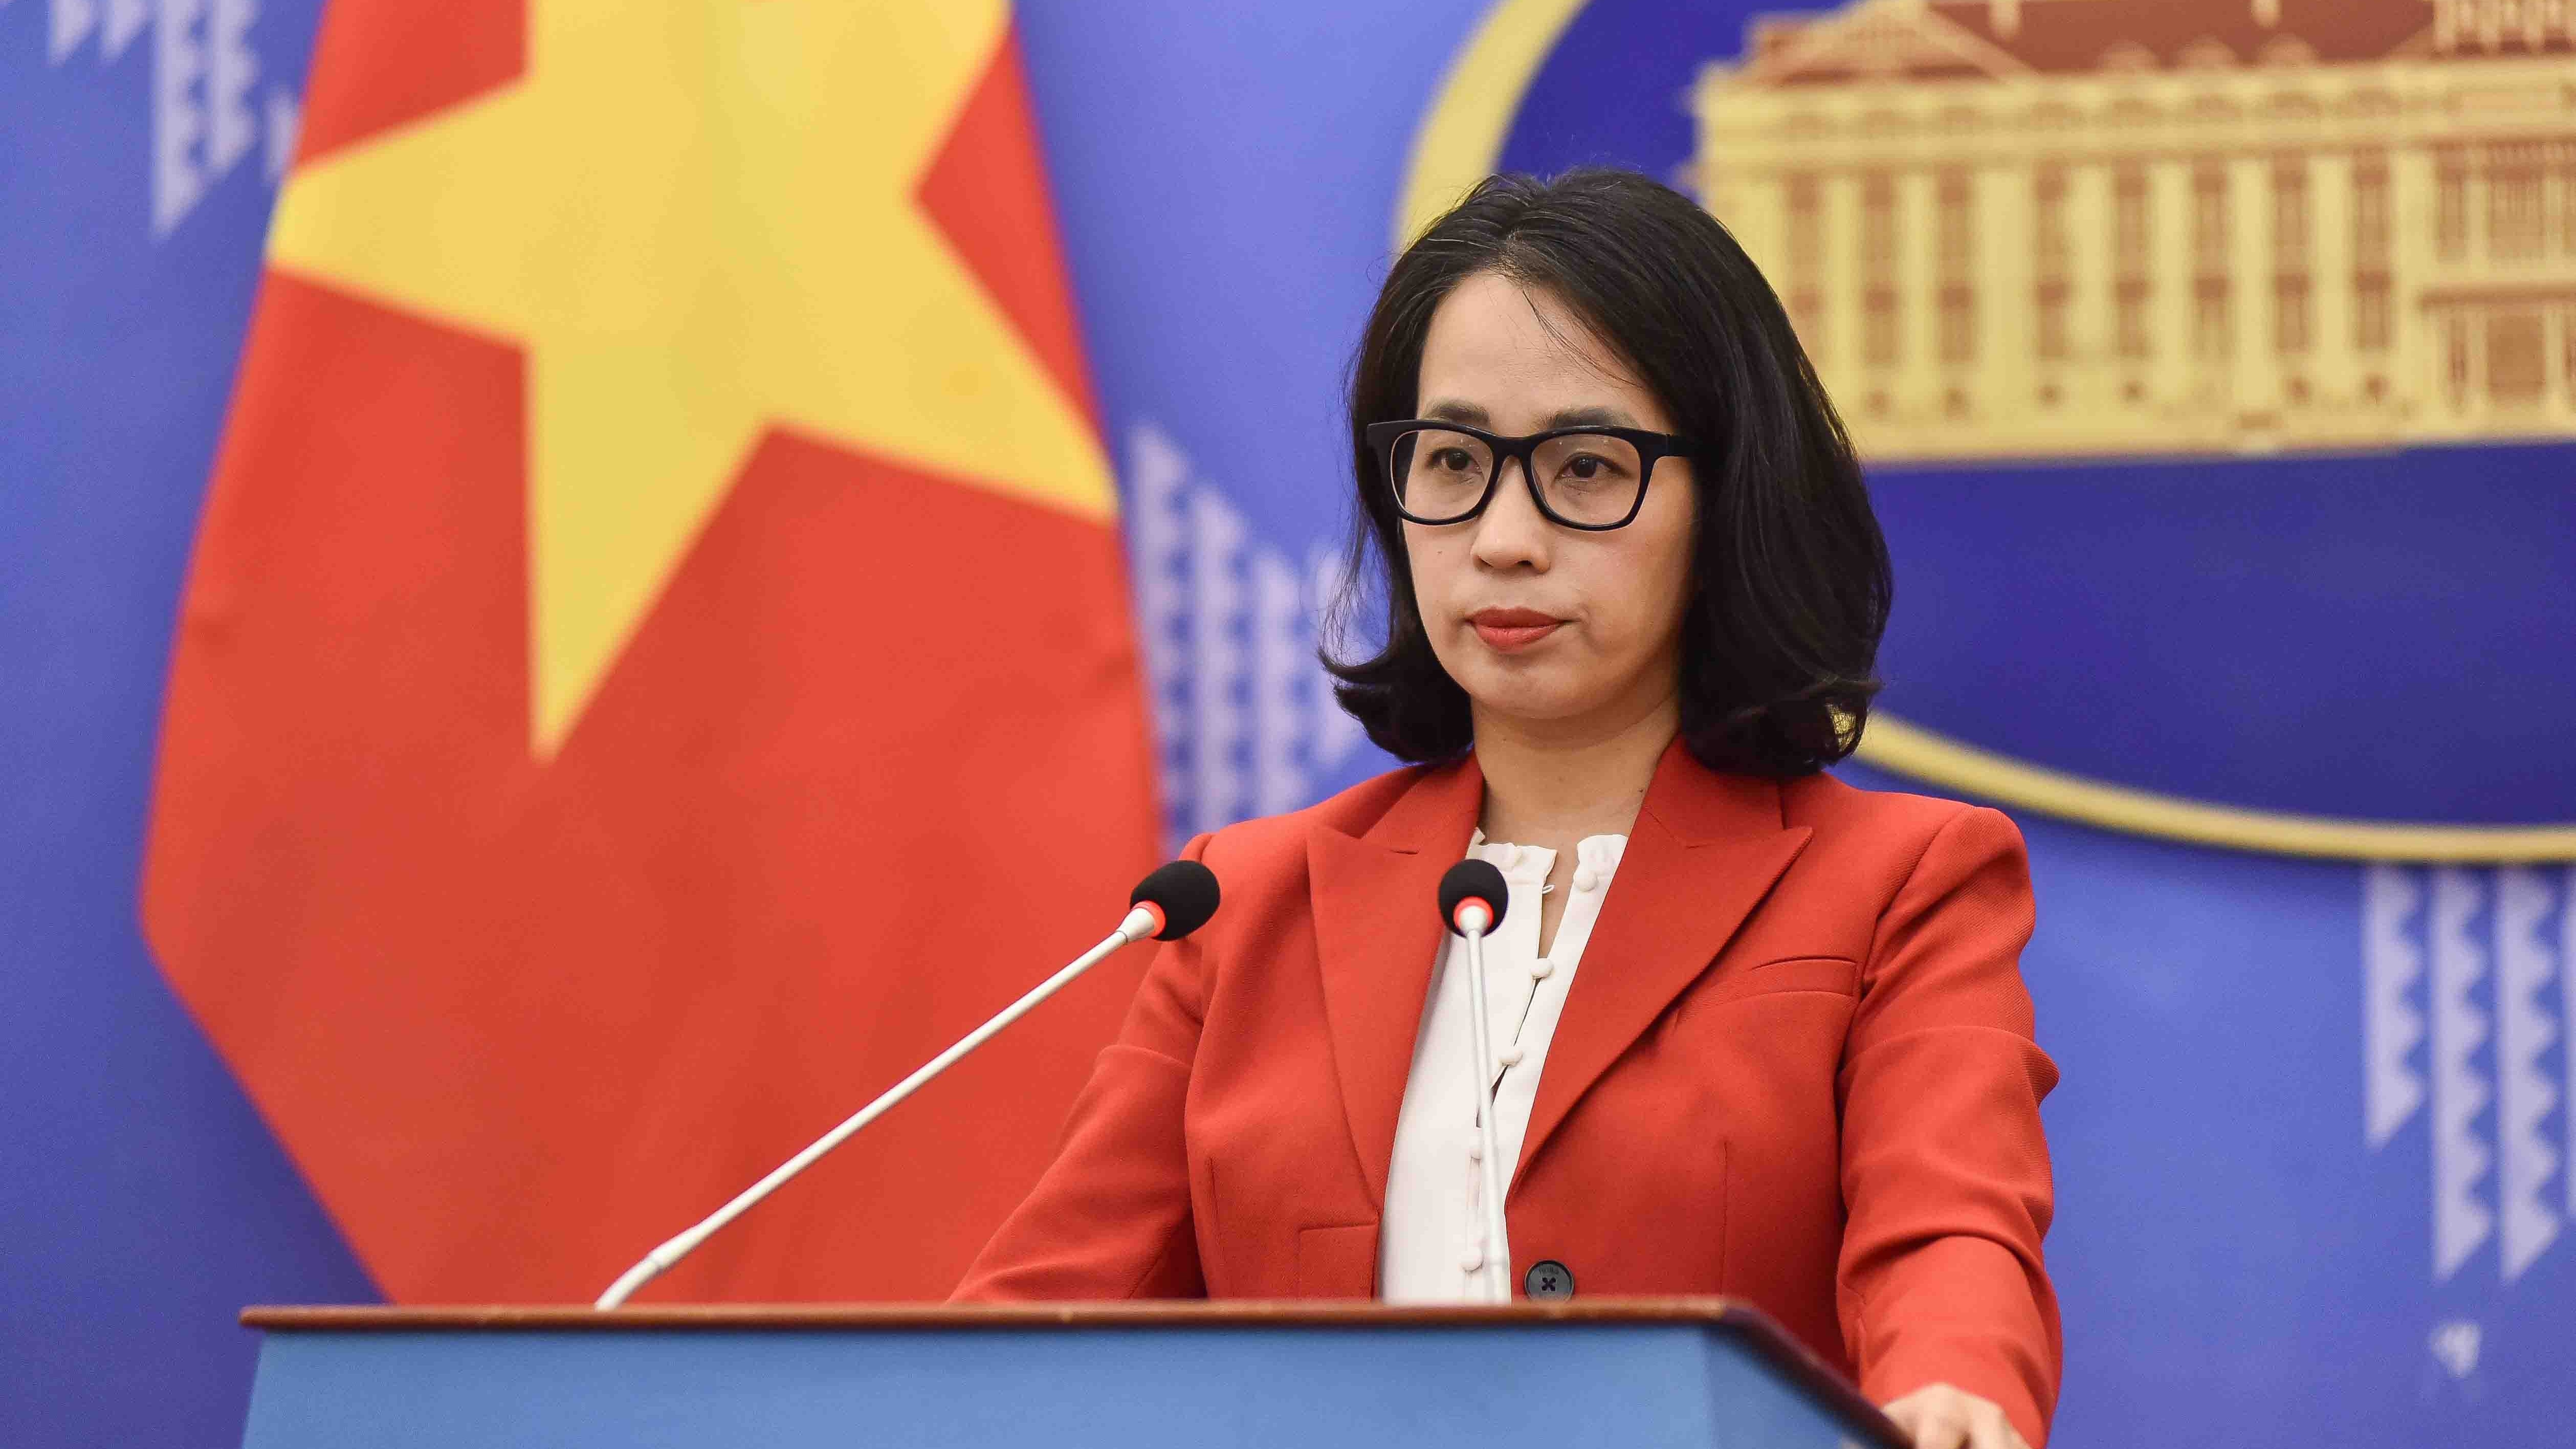 Vietnam, Cambodia work to raise public awareness of bilateral ties: Spokesperson